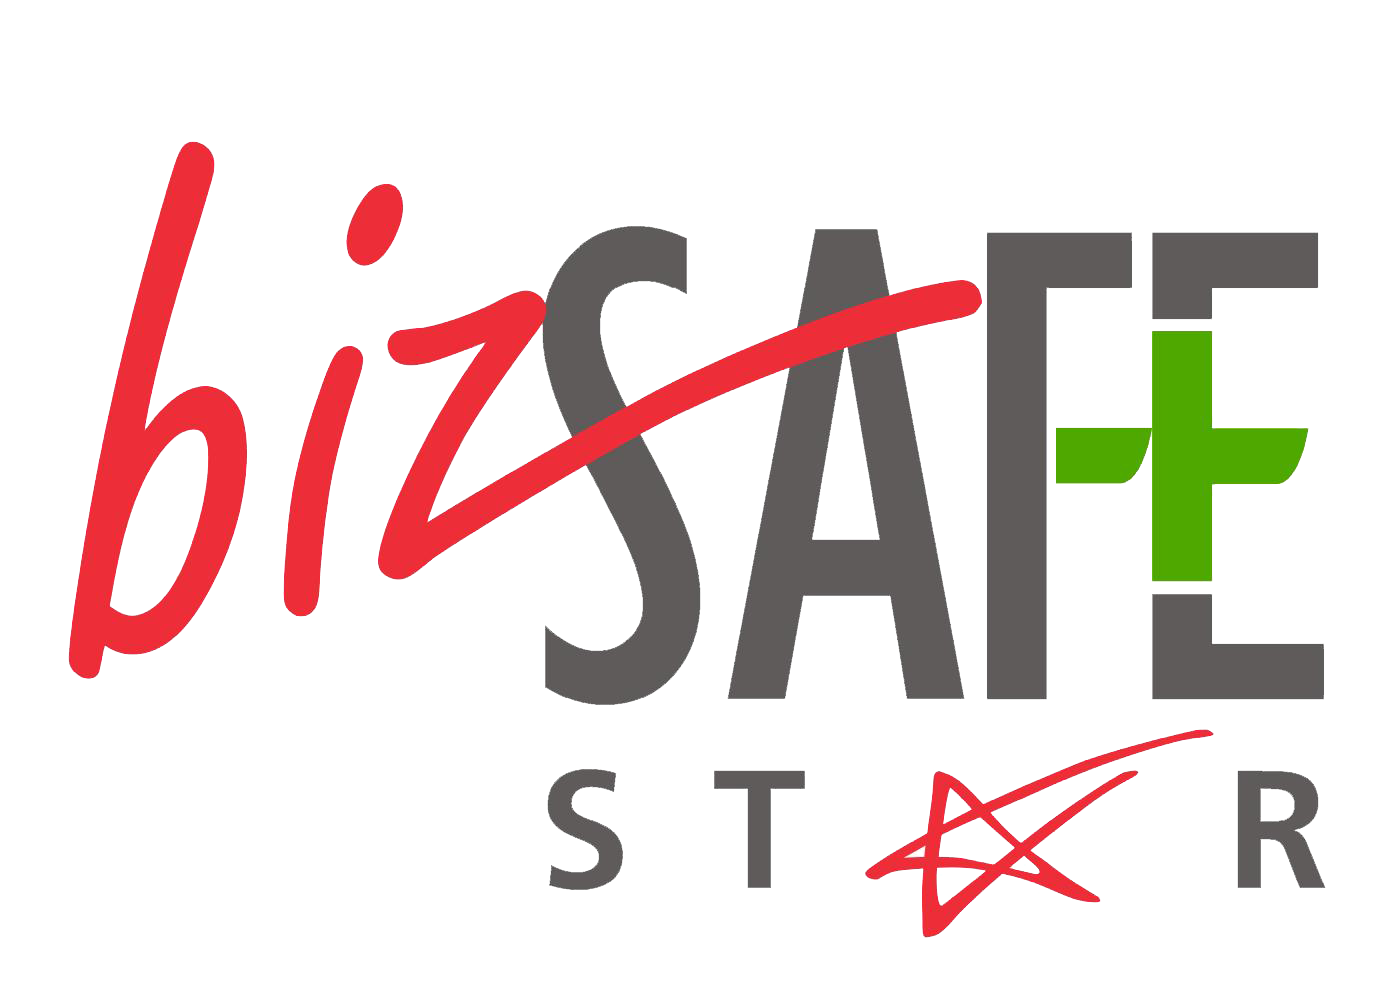 bizSAFE STAR logobgfgf